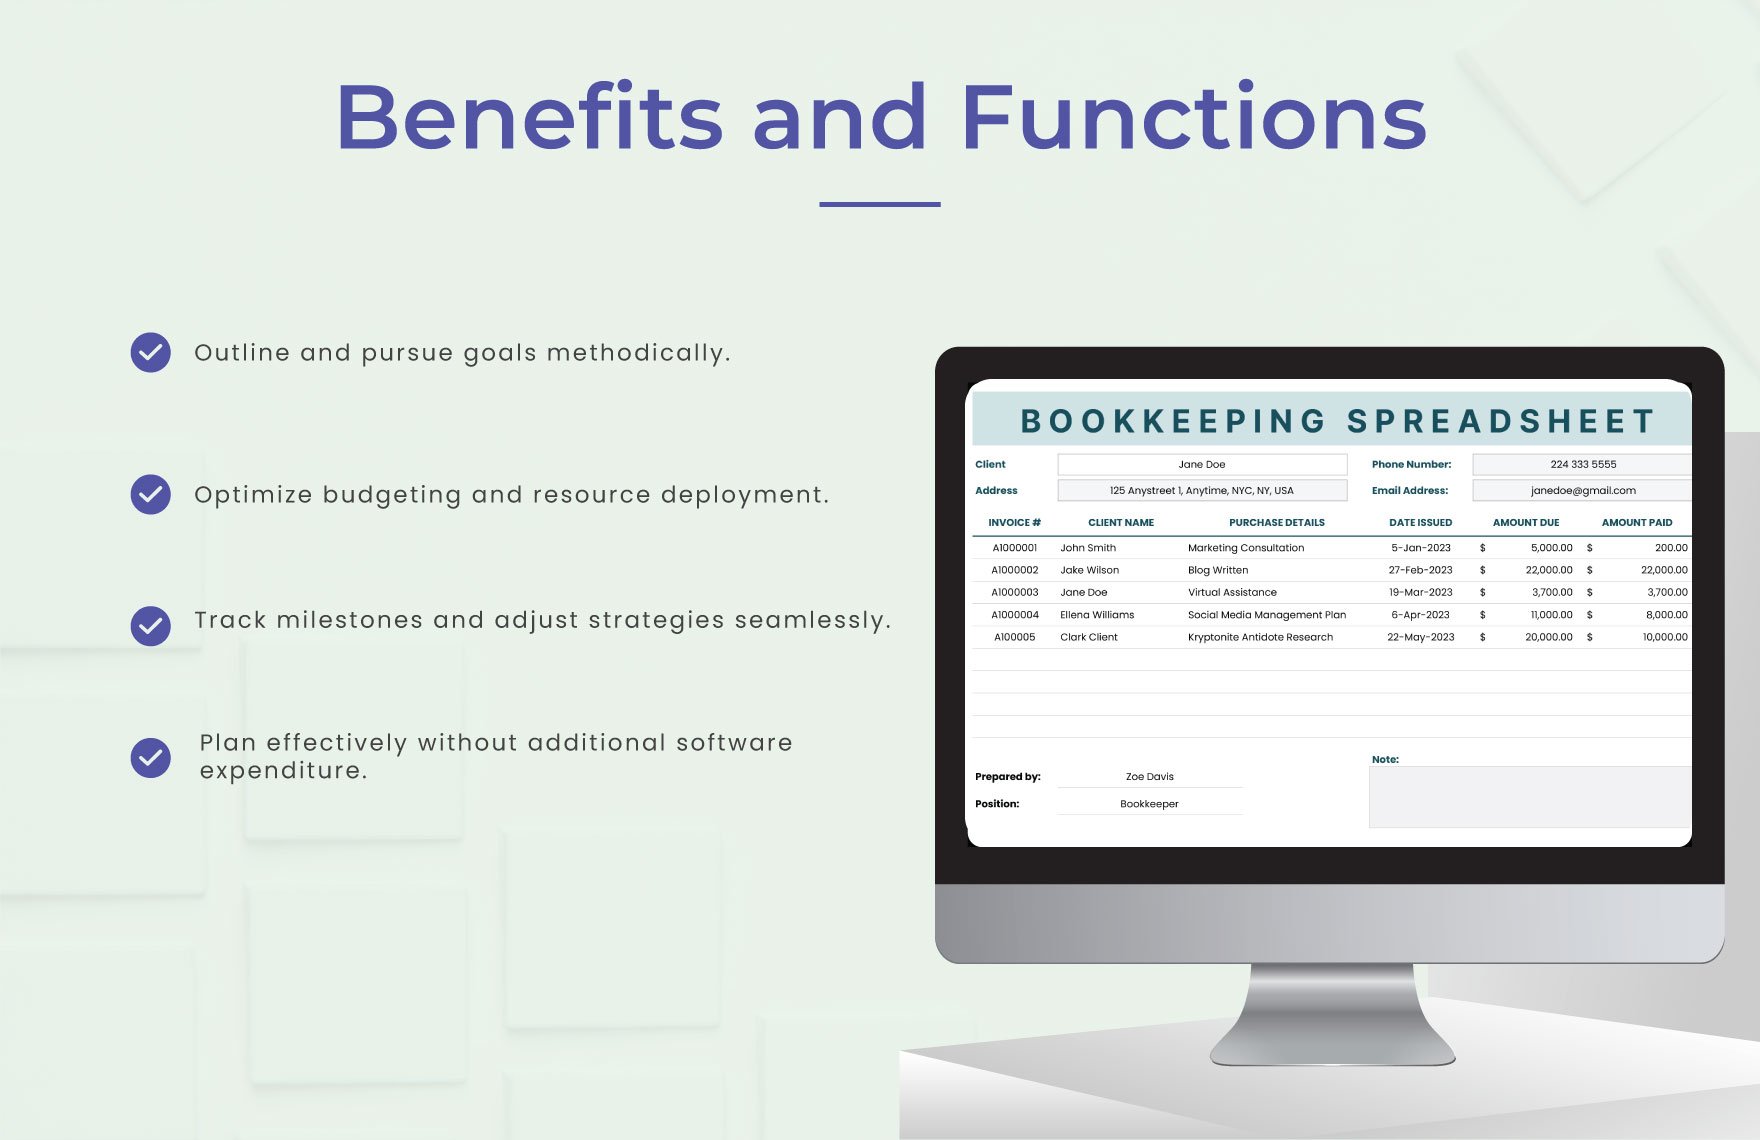 Bookkeeping Spreadsheet Template